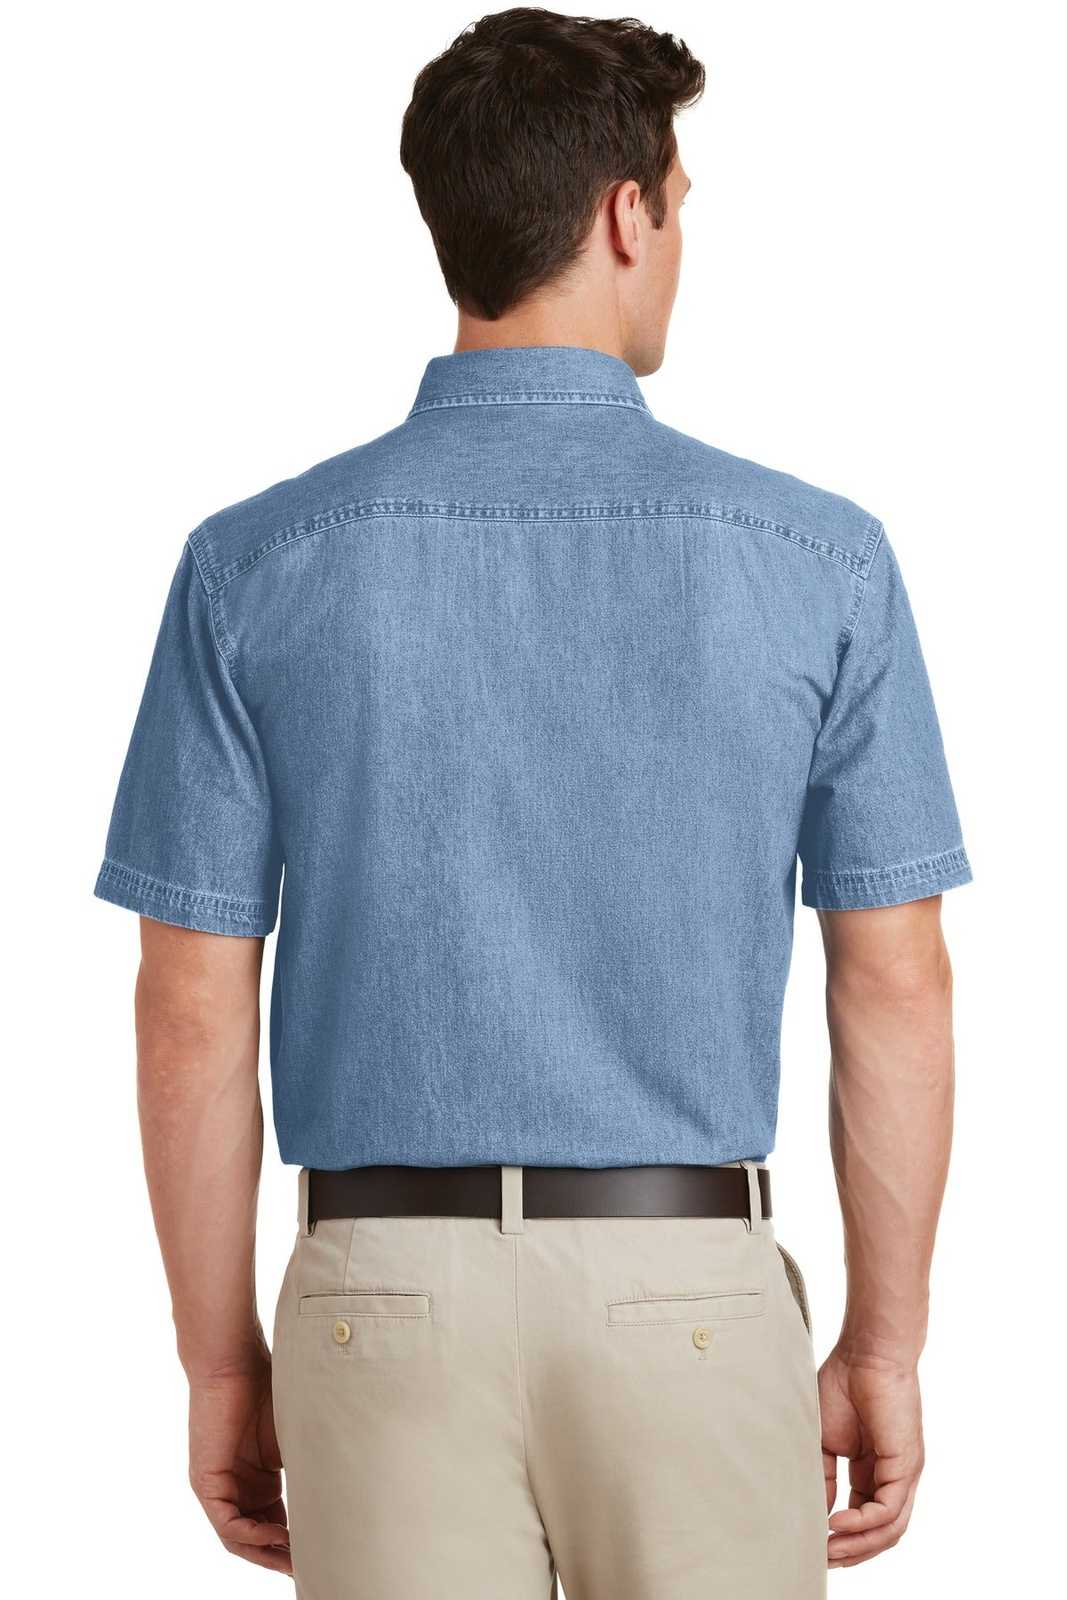 Port &amp; Company SP11 Short Sleeve Value Denim Shirt - Faded Blue - HIT a Double - 2